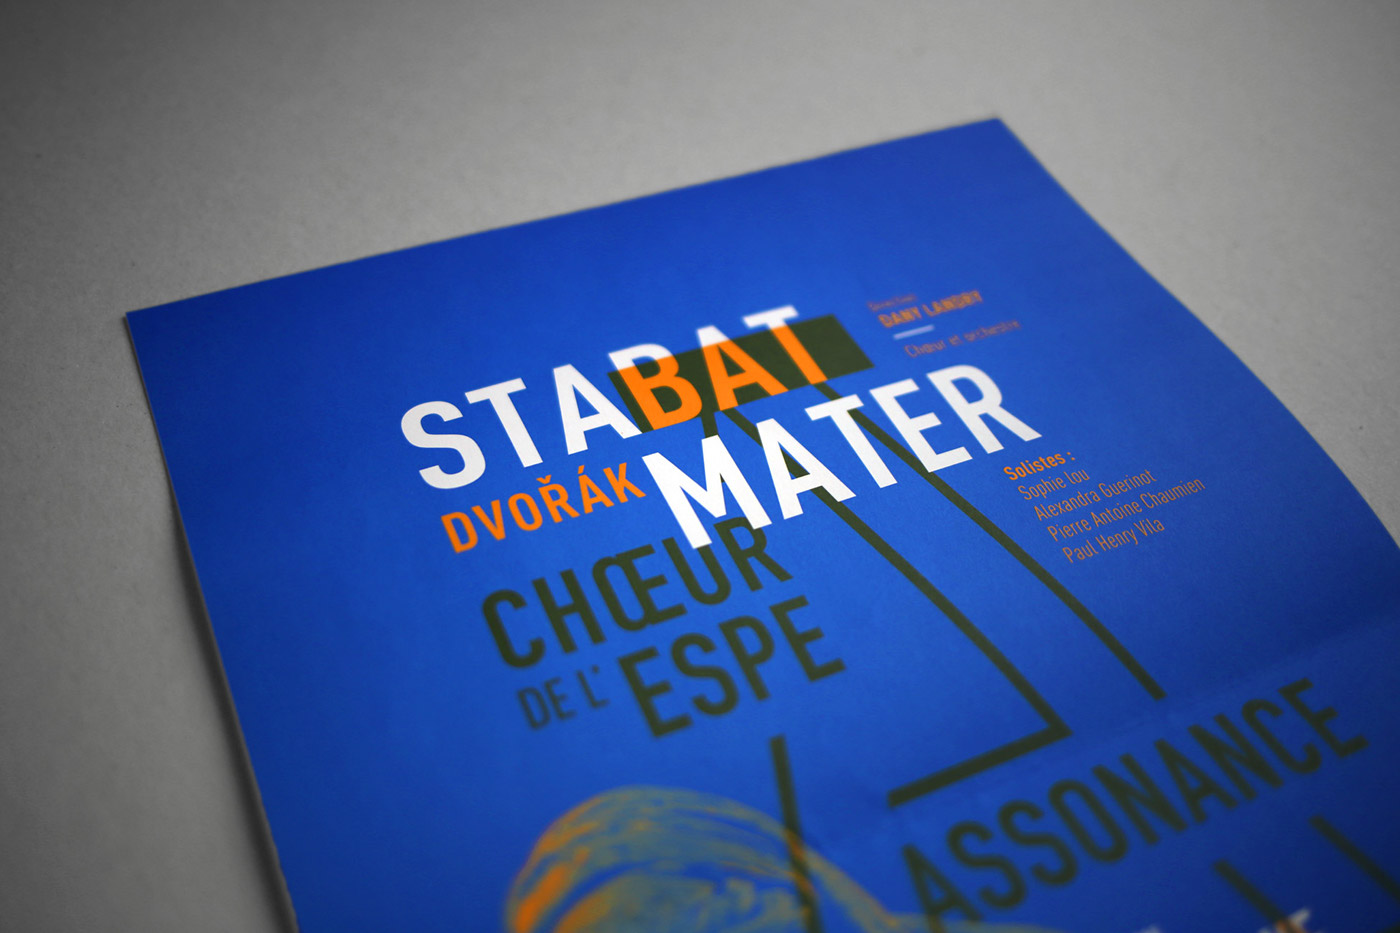 poster affiche stabat mater Classical Musique Musical classique choeur choir